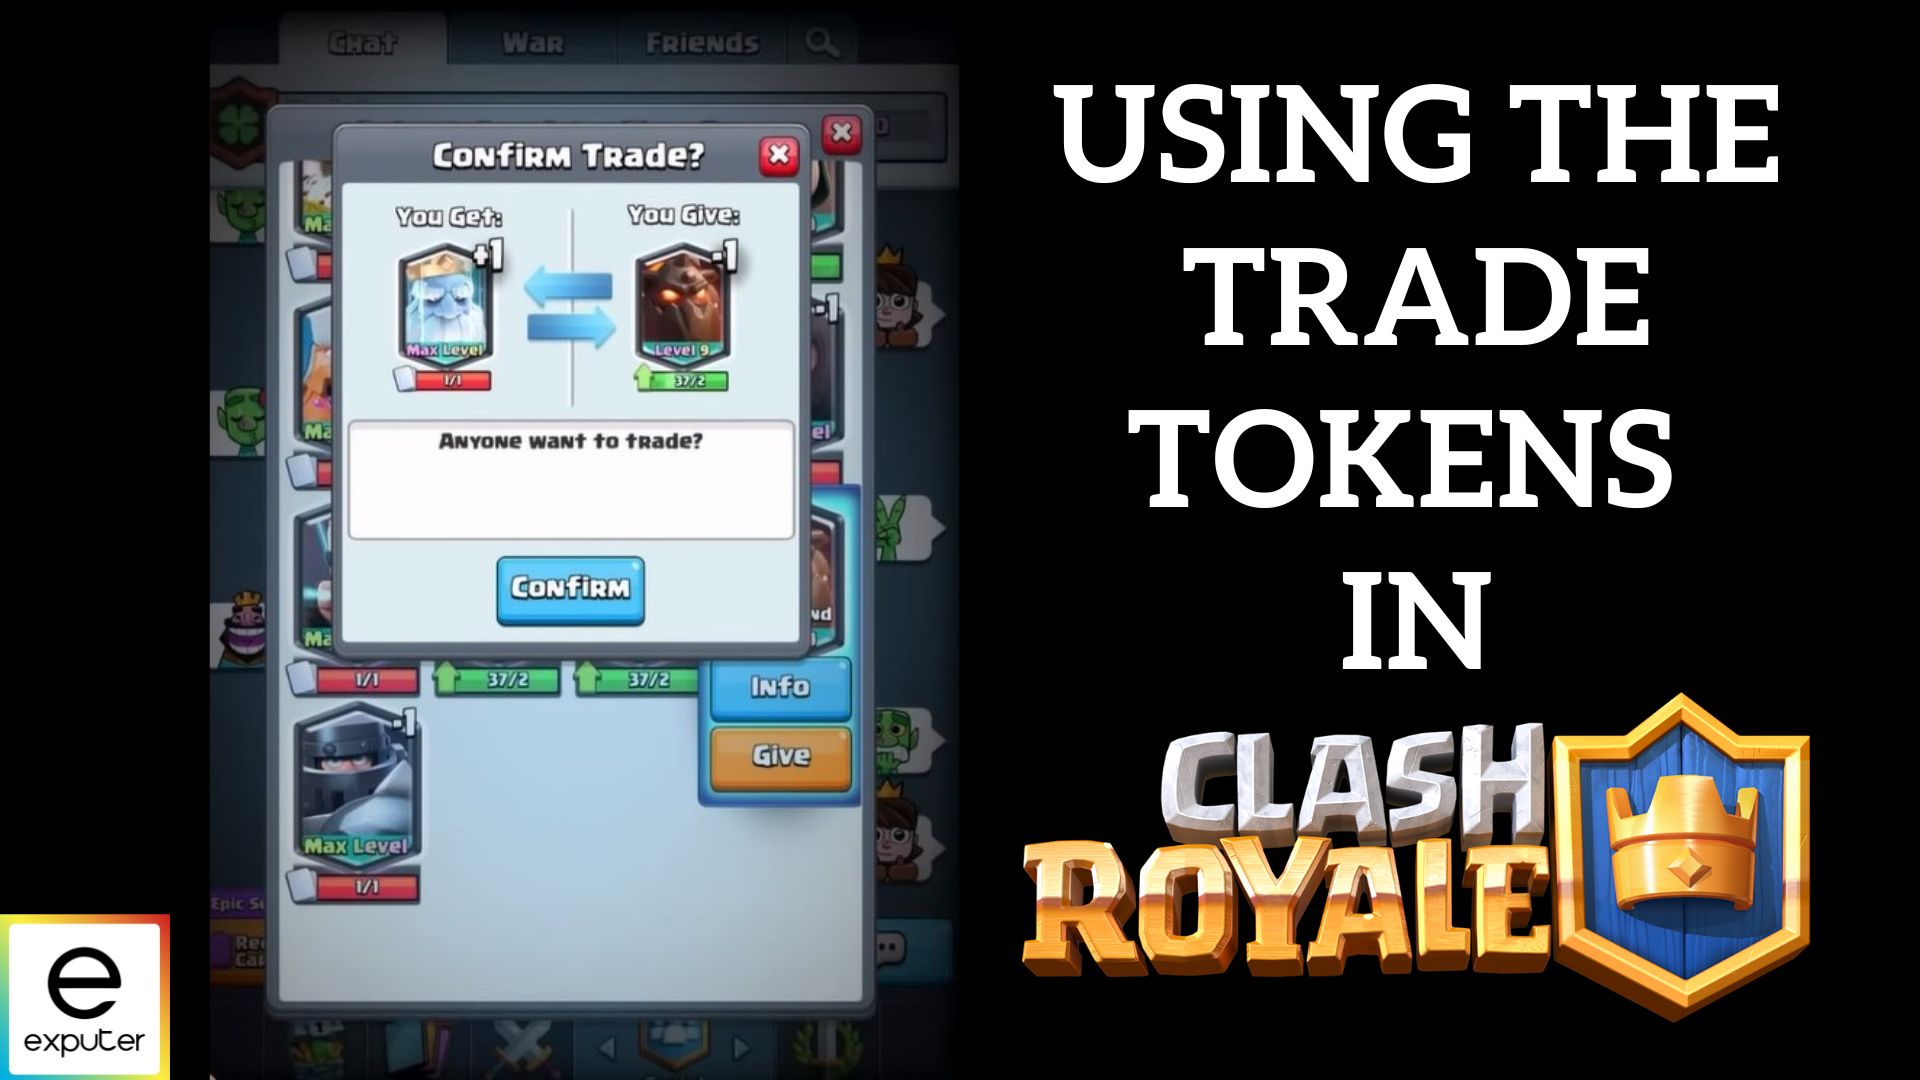 Clash Royale Token trading